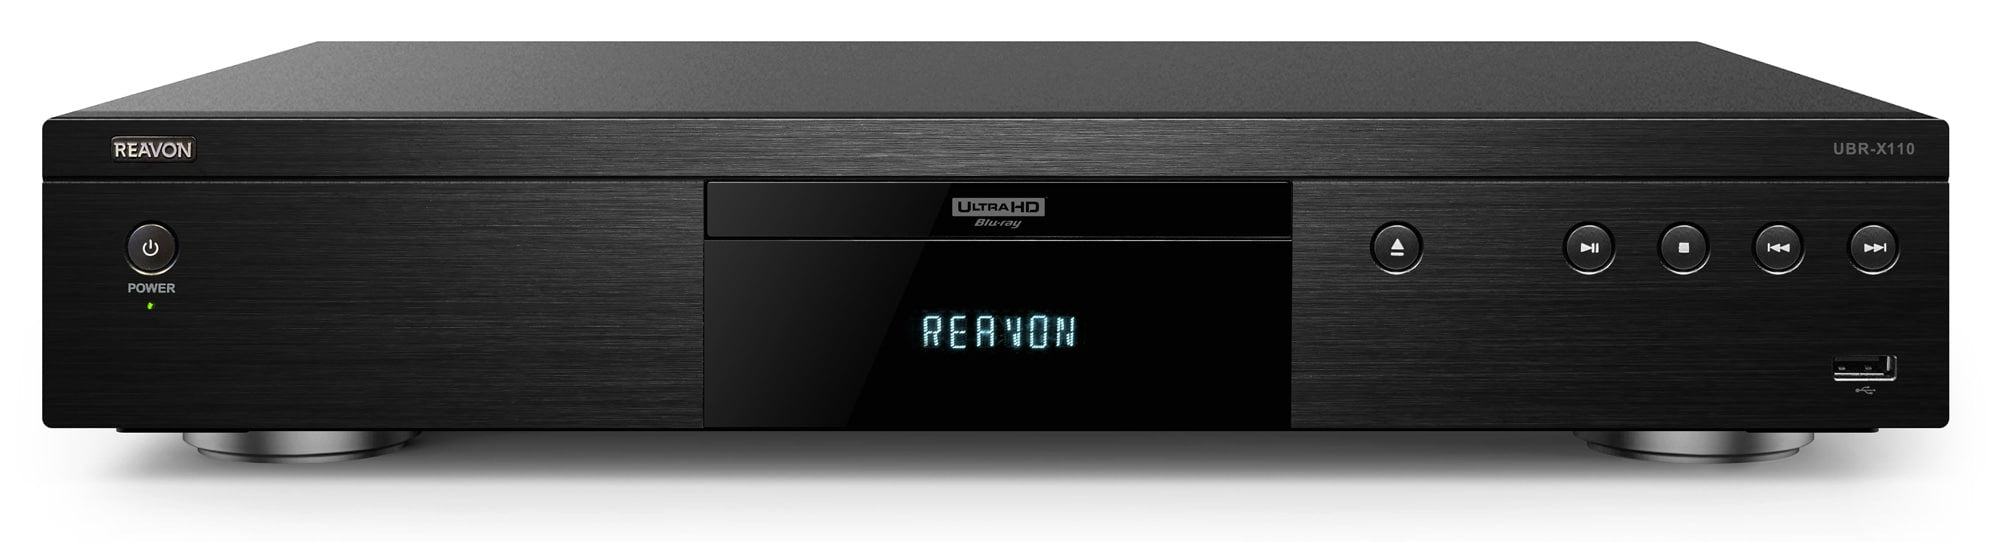 Reavon UBR-X110 4K Ultra HD Universal Disc Player